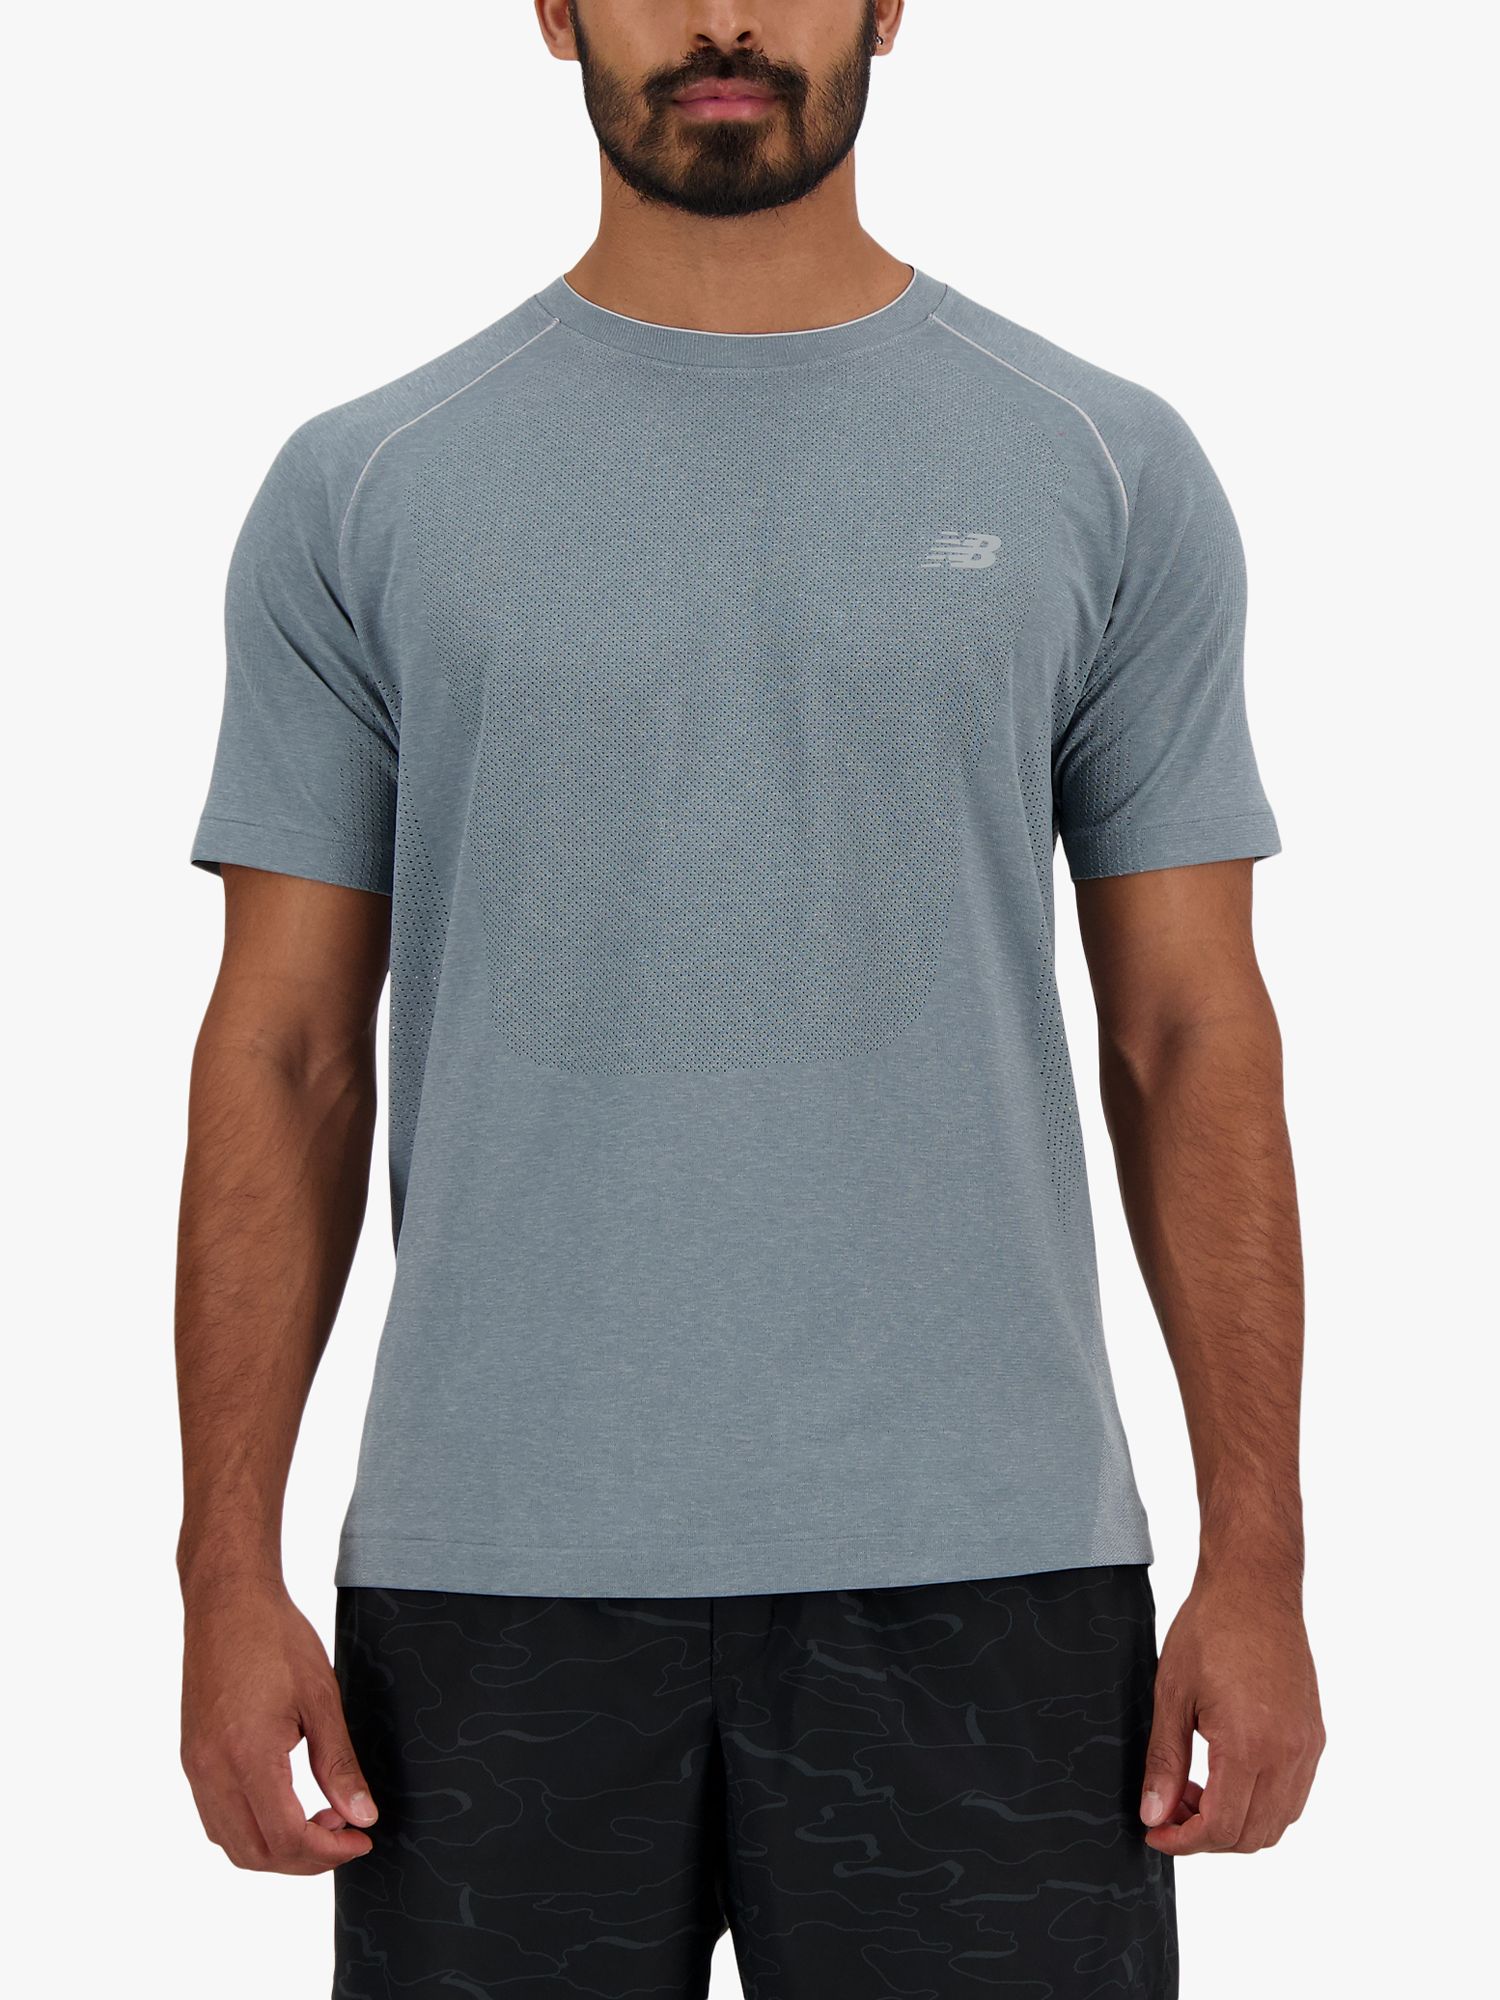 New Balance Knit T-Shirt, Athletic Grey, S